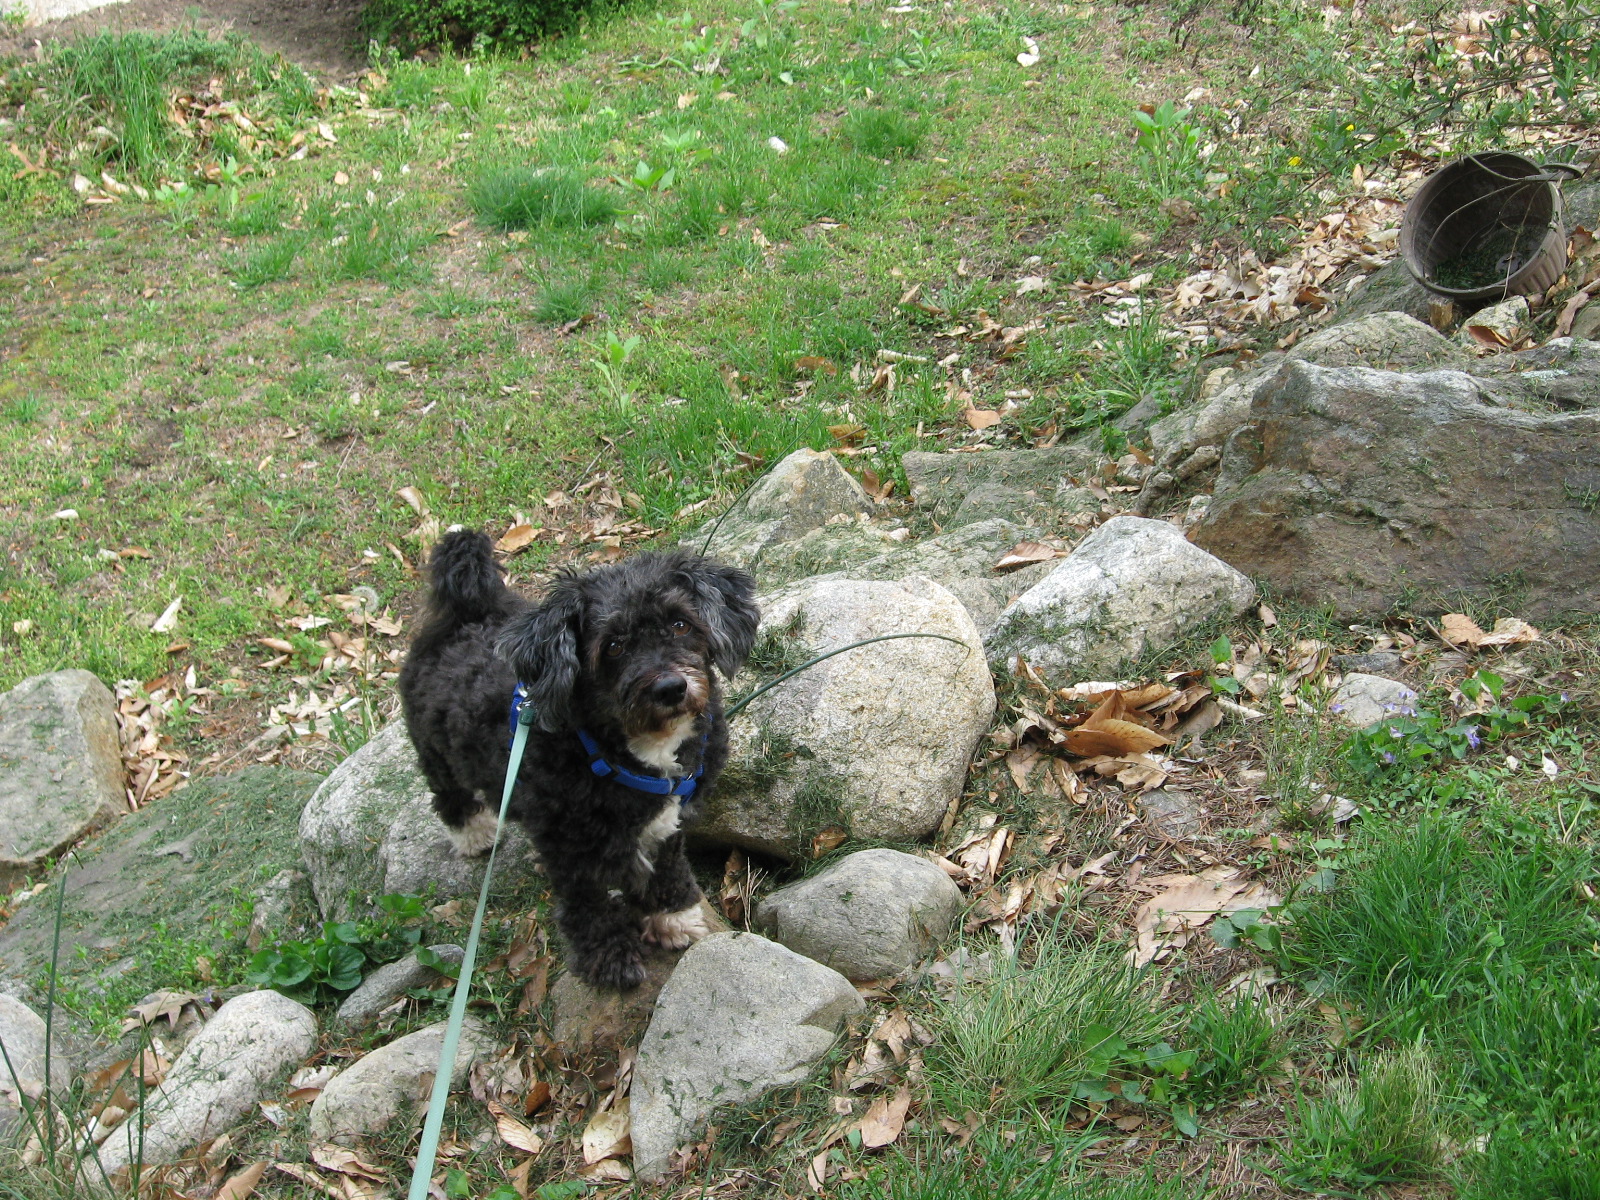 A dog on some rocks